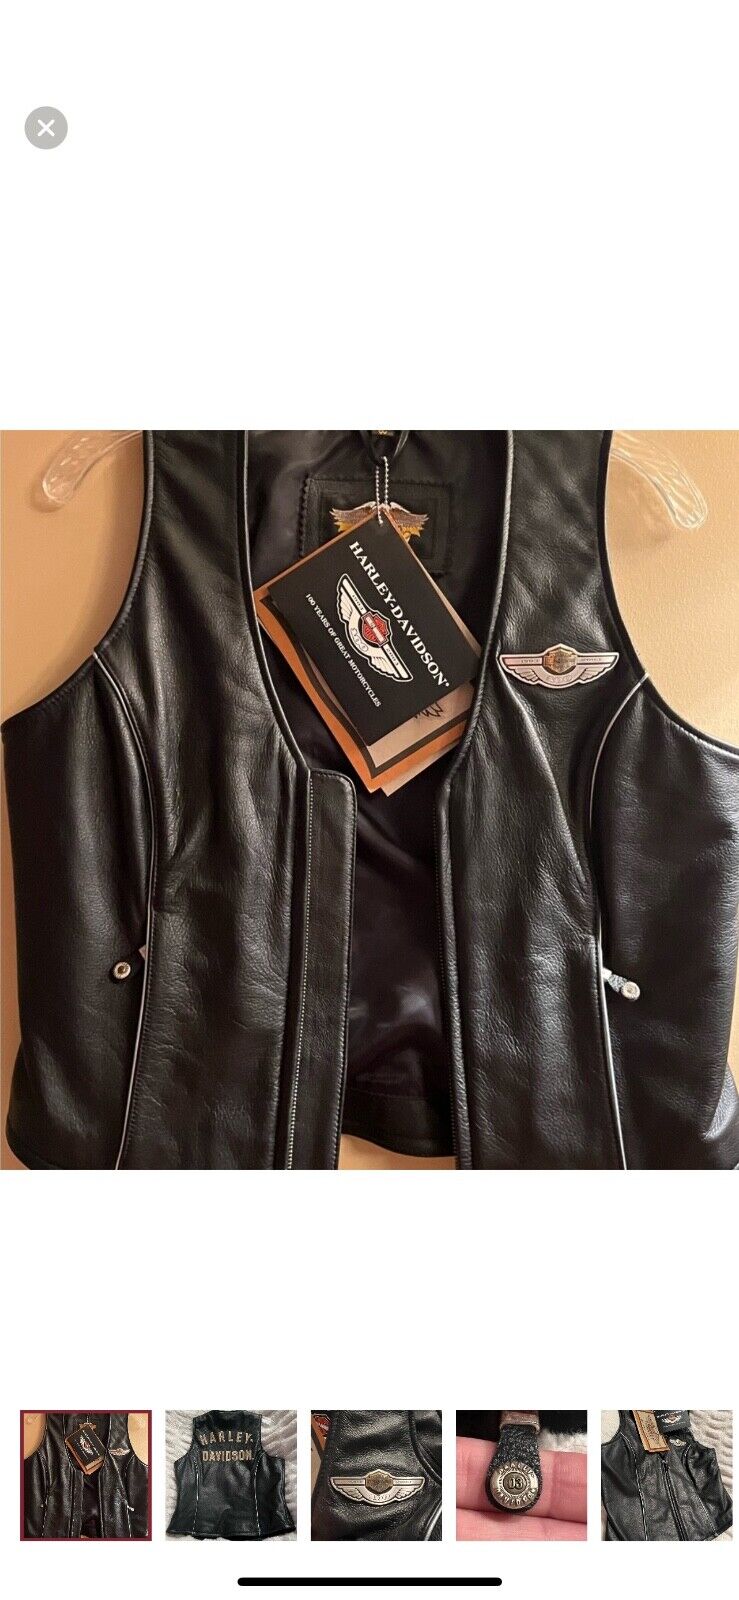 NEW Harley Davidson 100th Anniv. Leather Vest: Women’s Small NWT/VTG *OFFER*